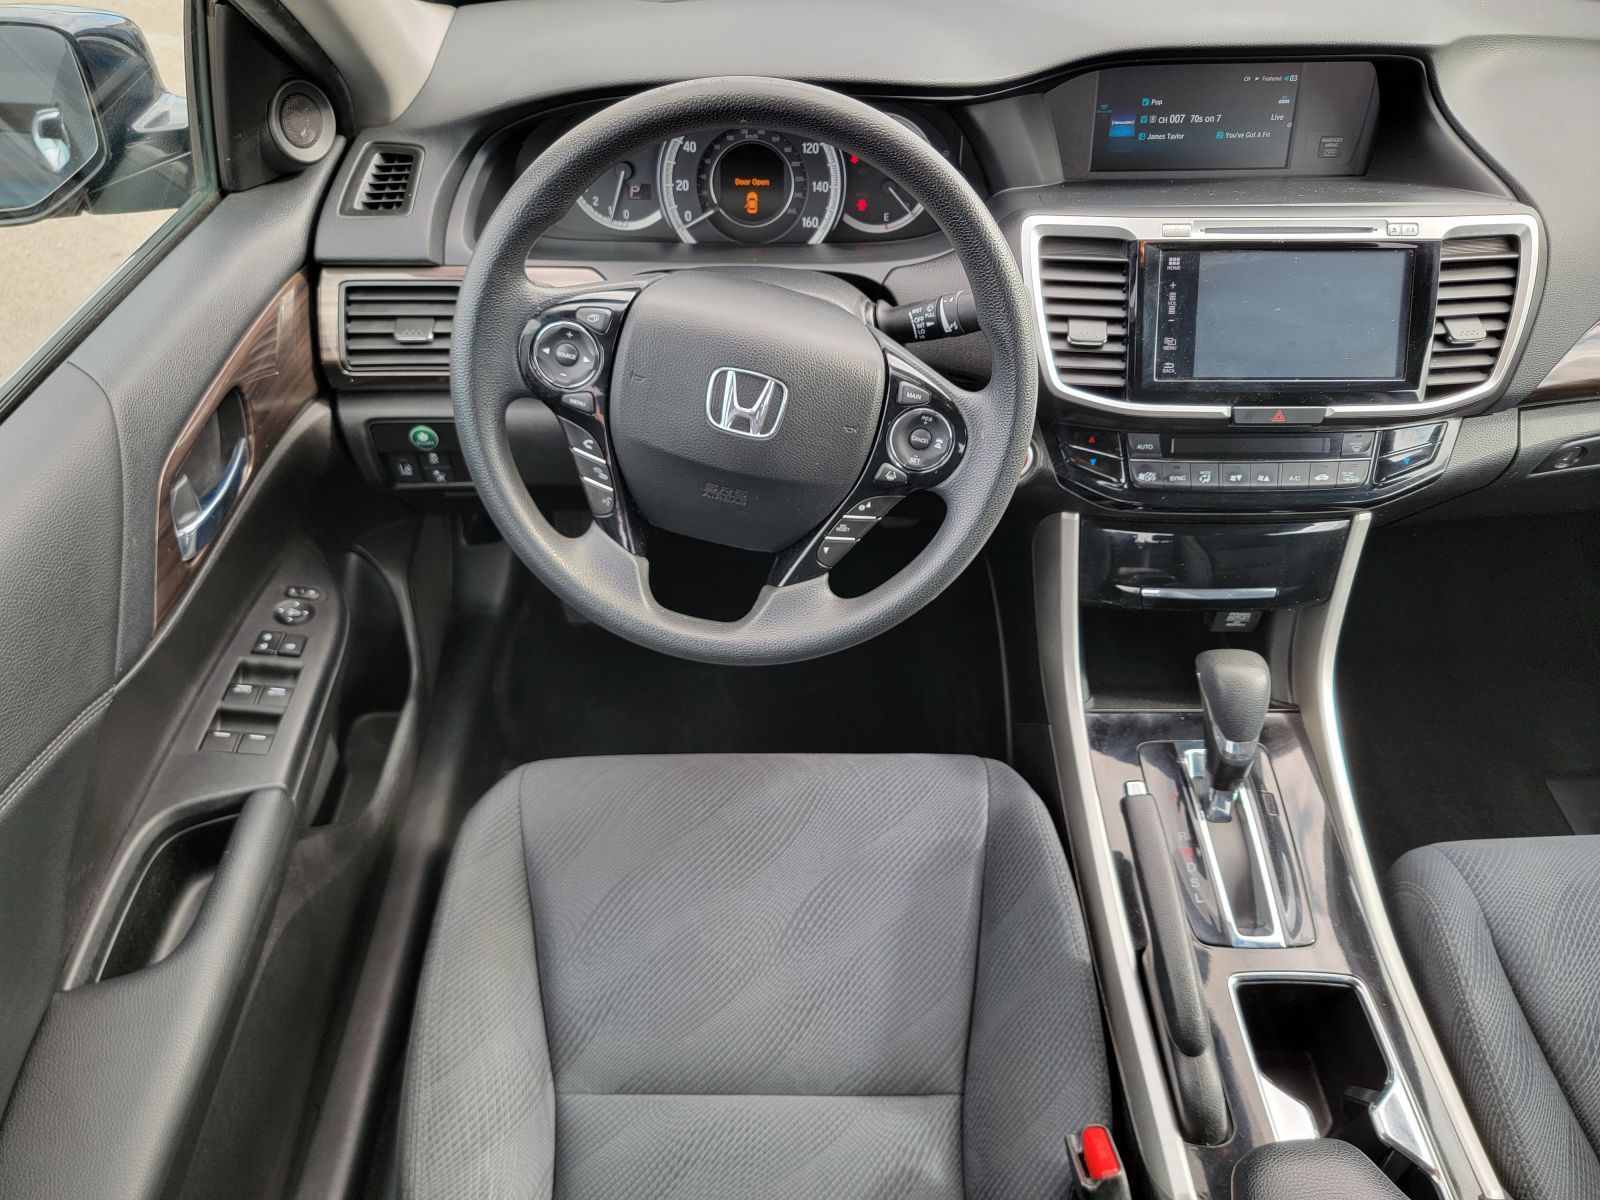 Used, 2016 Honda Accord 4dr I4 CVT EX w/Honda Sensing, Black, 13954A-17